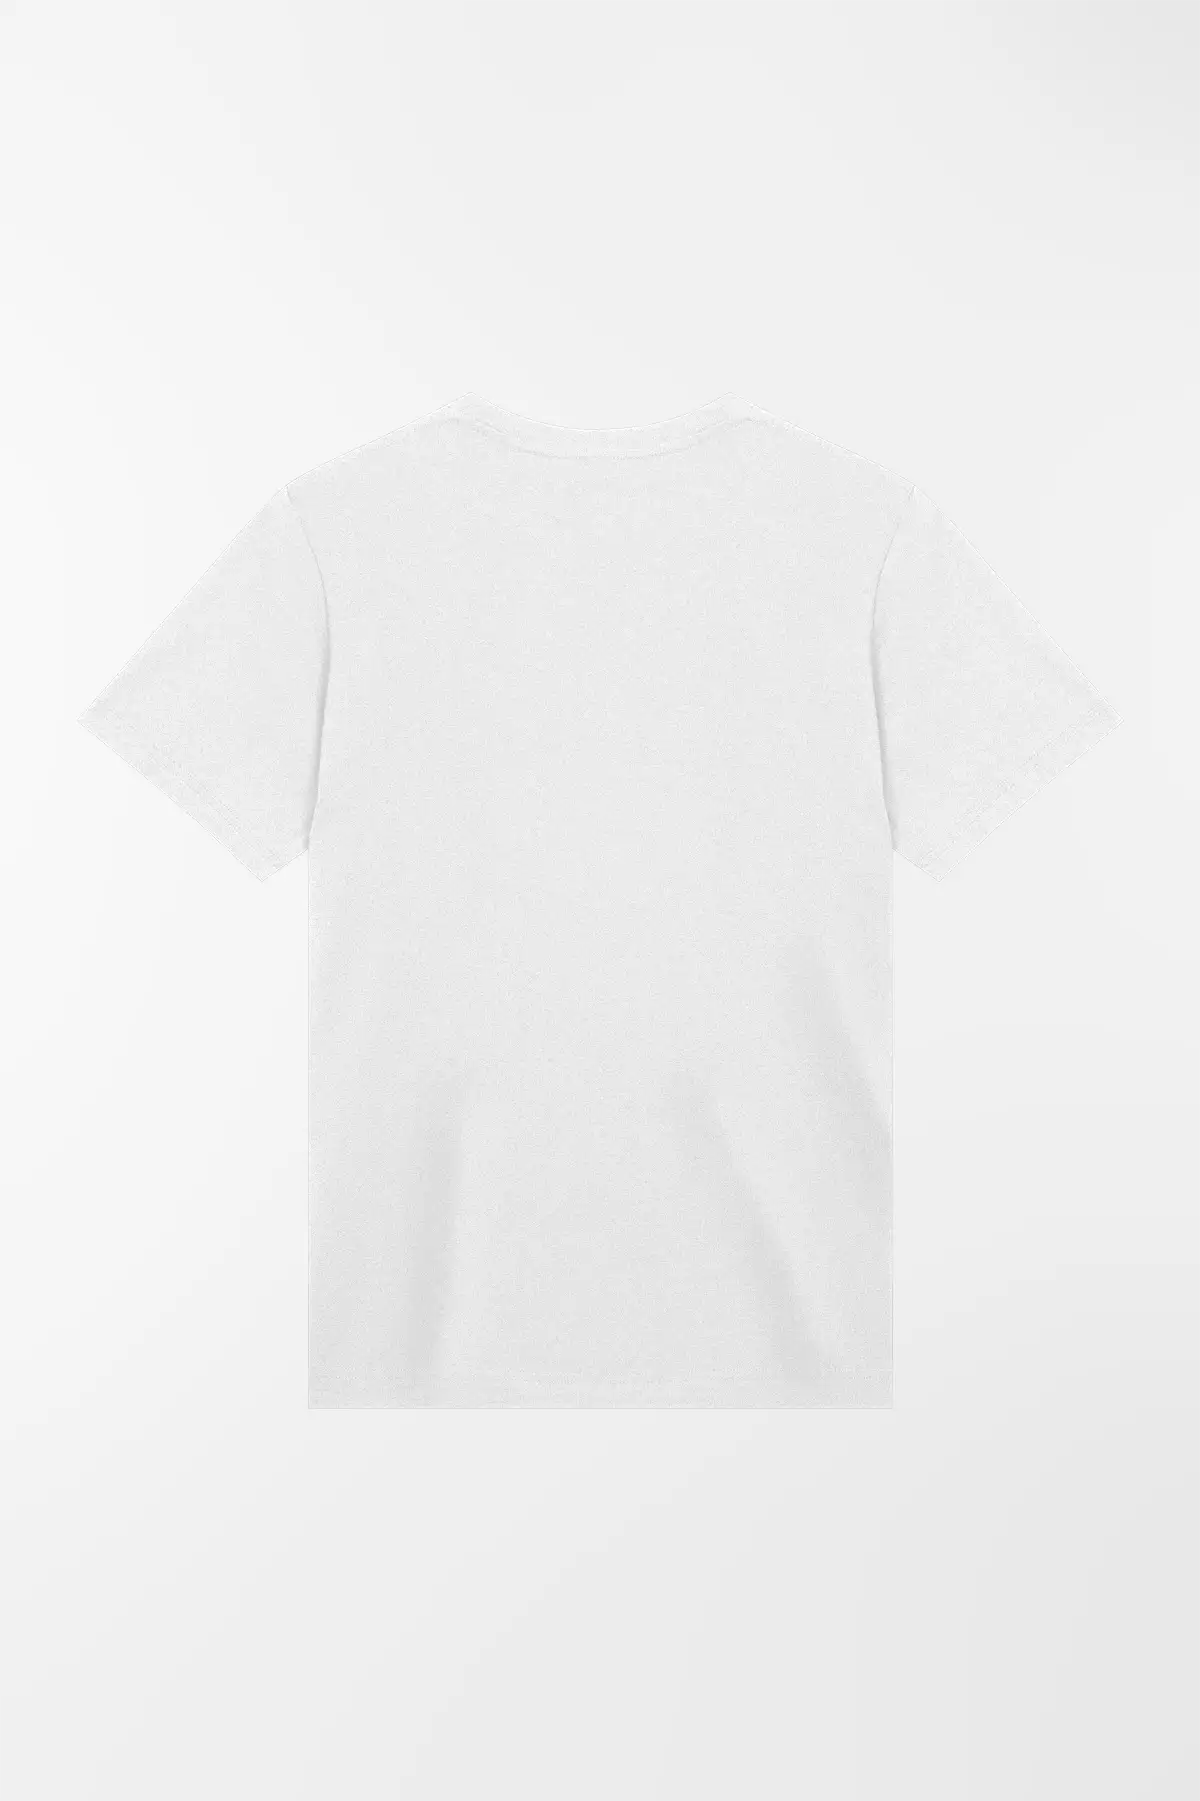 Bad Apple • Touhou T-Shirt White